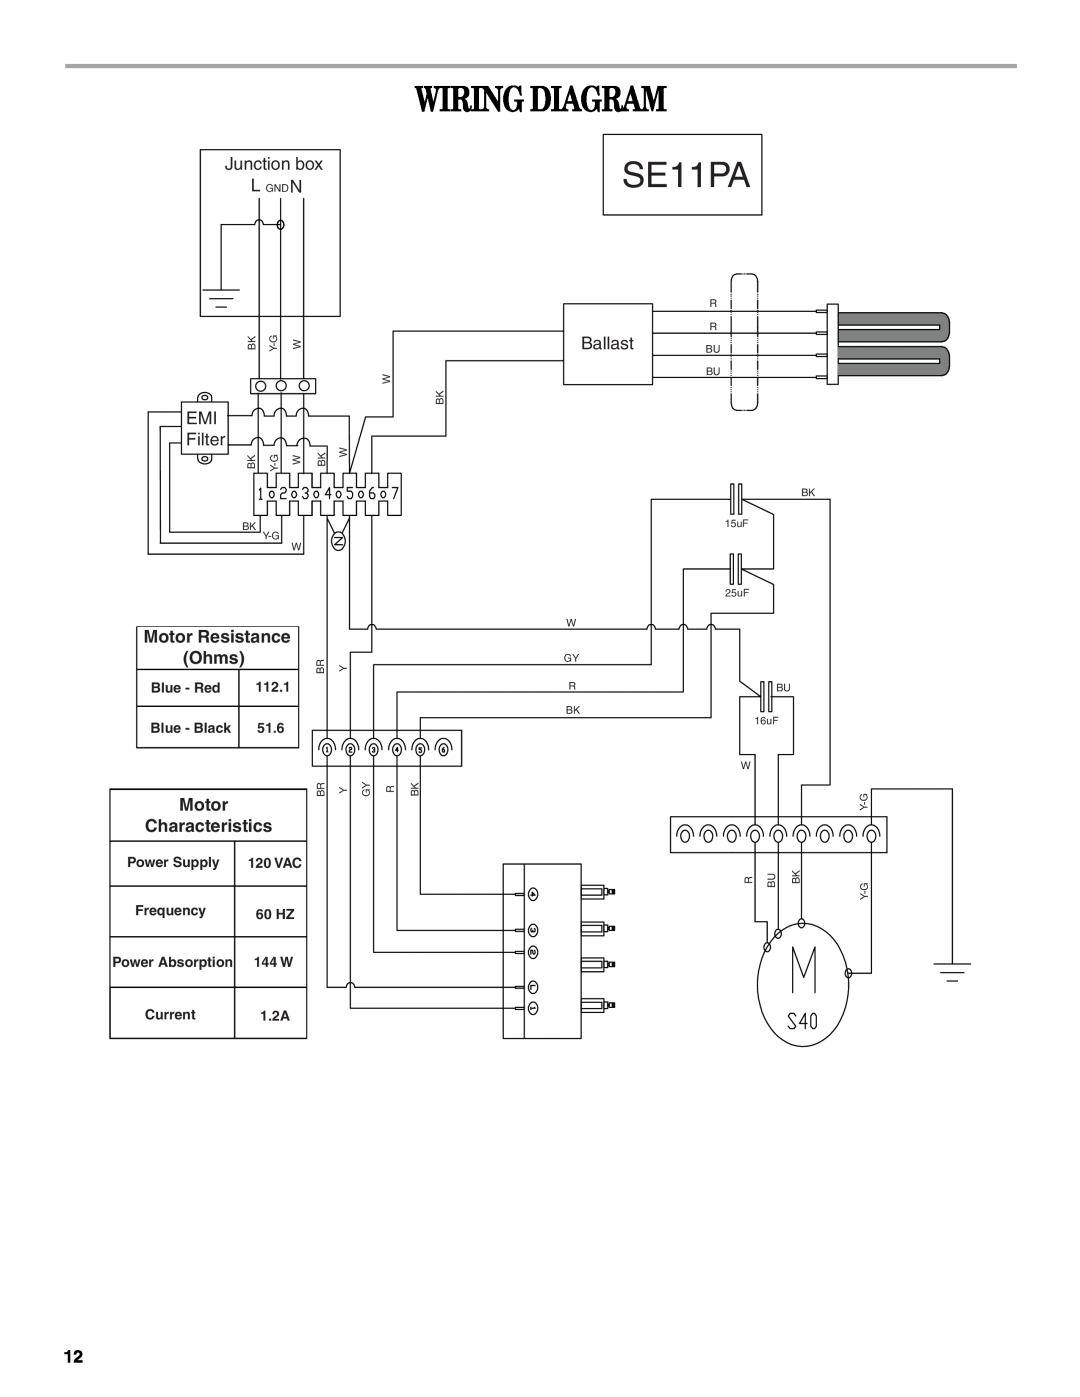 Whirlpool LI3Y3B Wiring Diagram, SE11PA, Junction box L GNDN, EMI Filter, Motor Resistance, Ohms, Motor Characteristics 